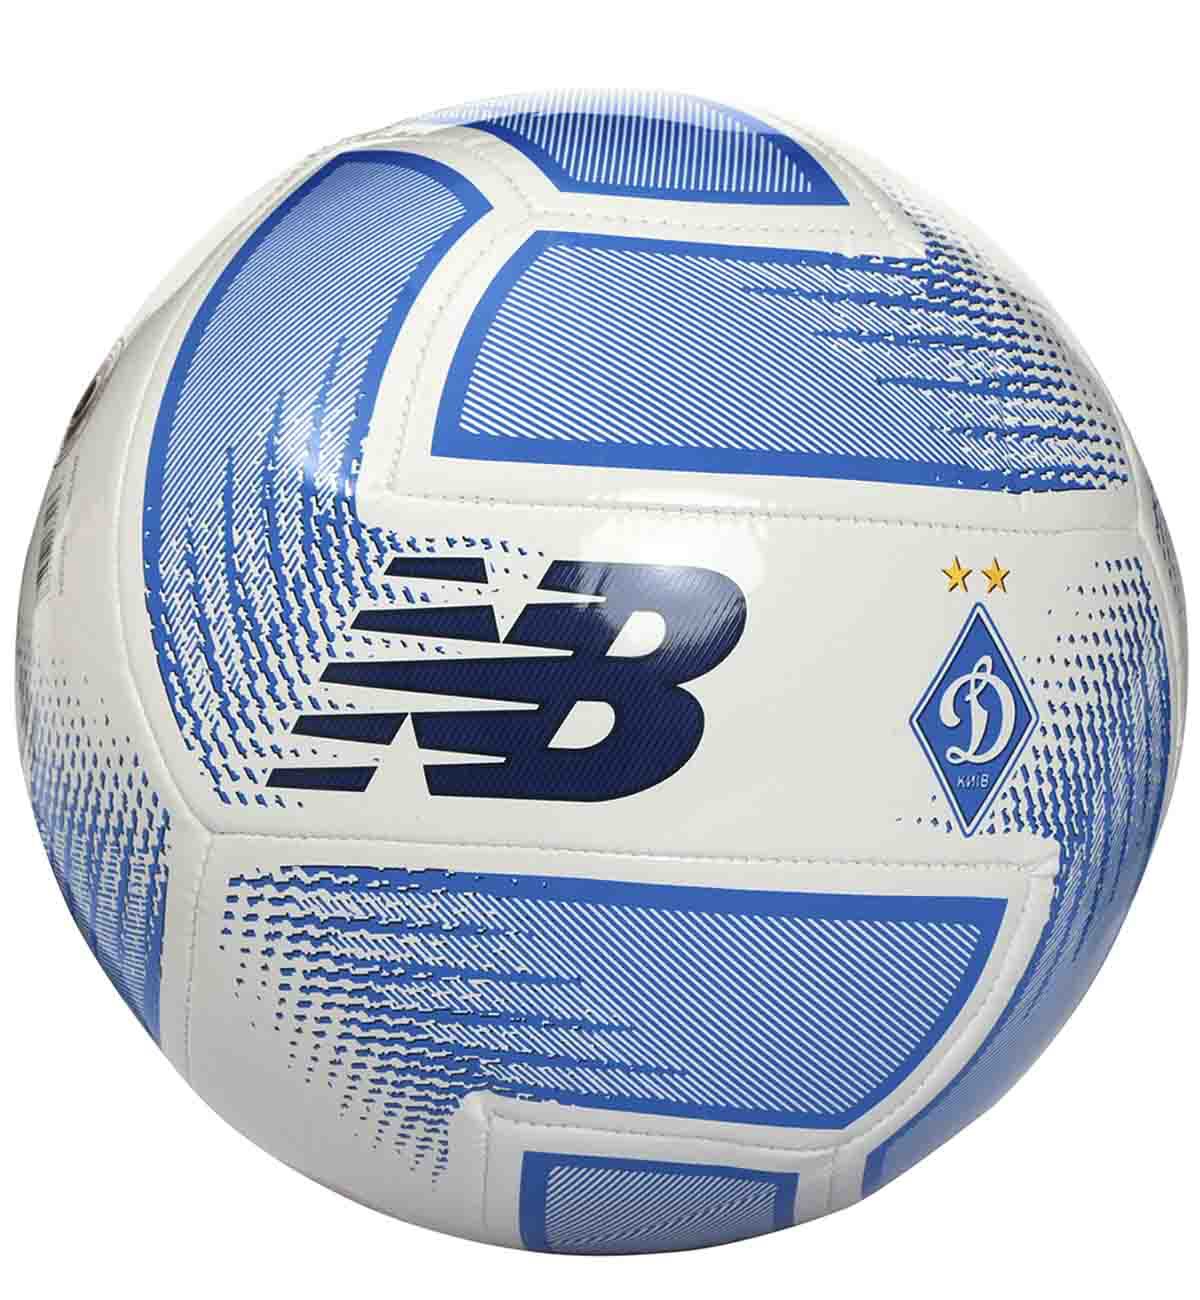 FCDK white/blue siccer ball (size 5)